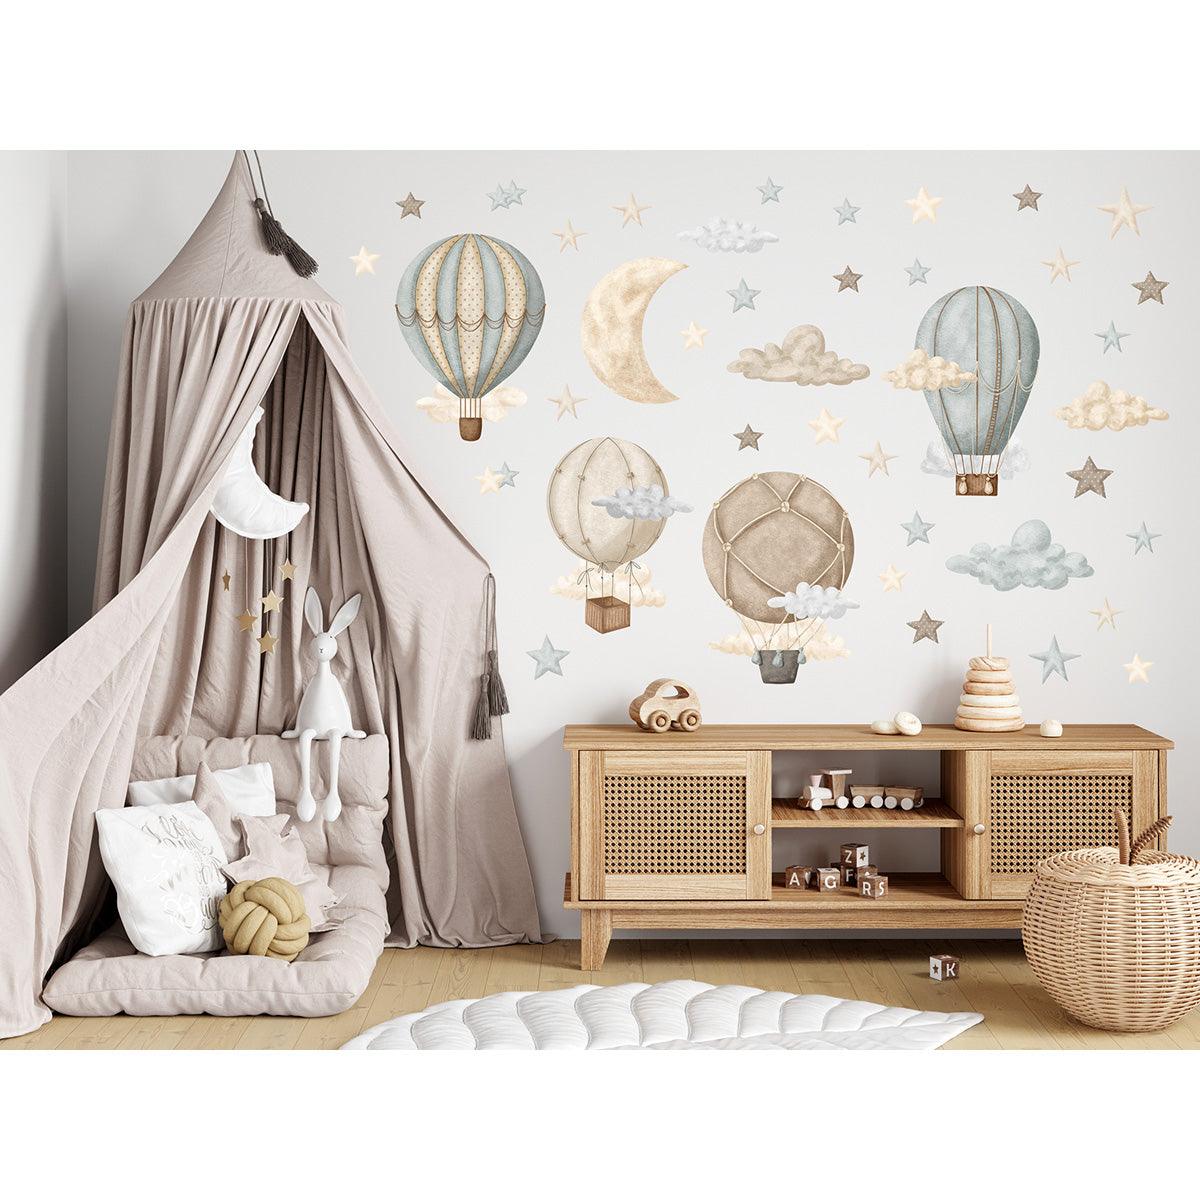 Wandtattoo Kinderzimmer - Heißluftballon - Nook' d' Mel - Kinder Concept Store